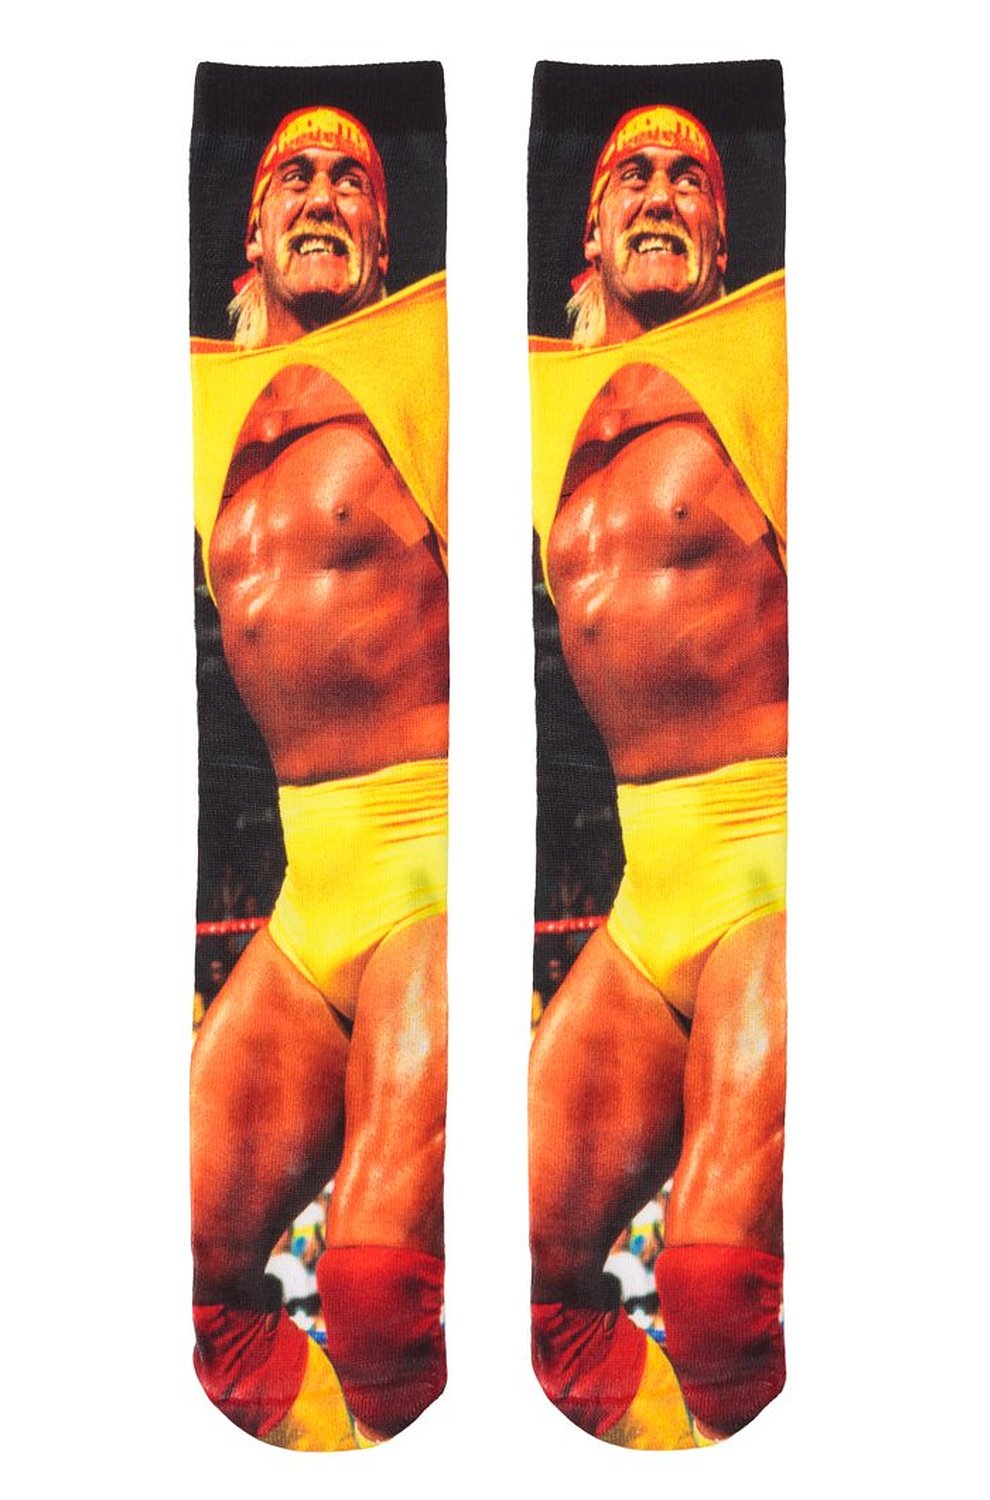 Hulk Hogan adult socks 1